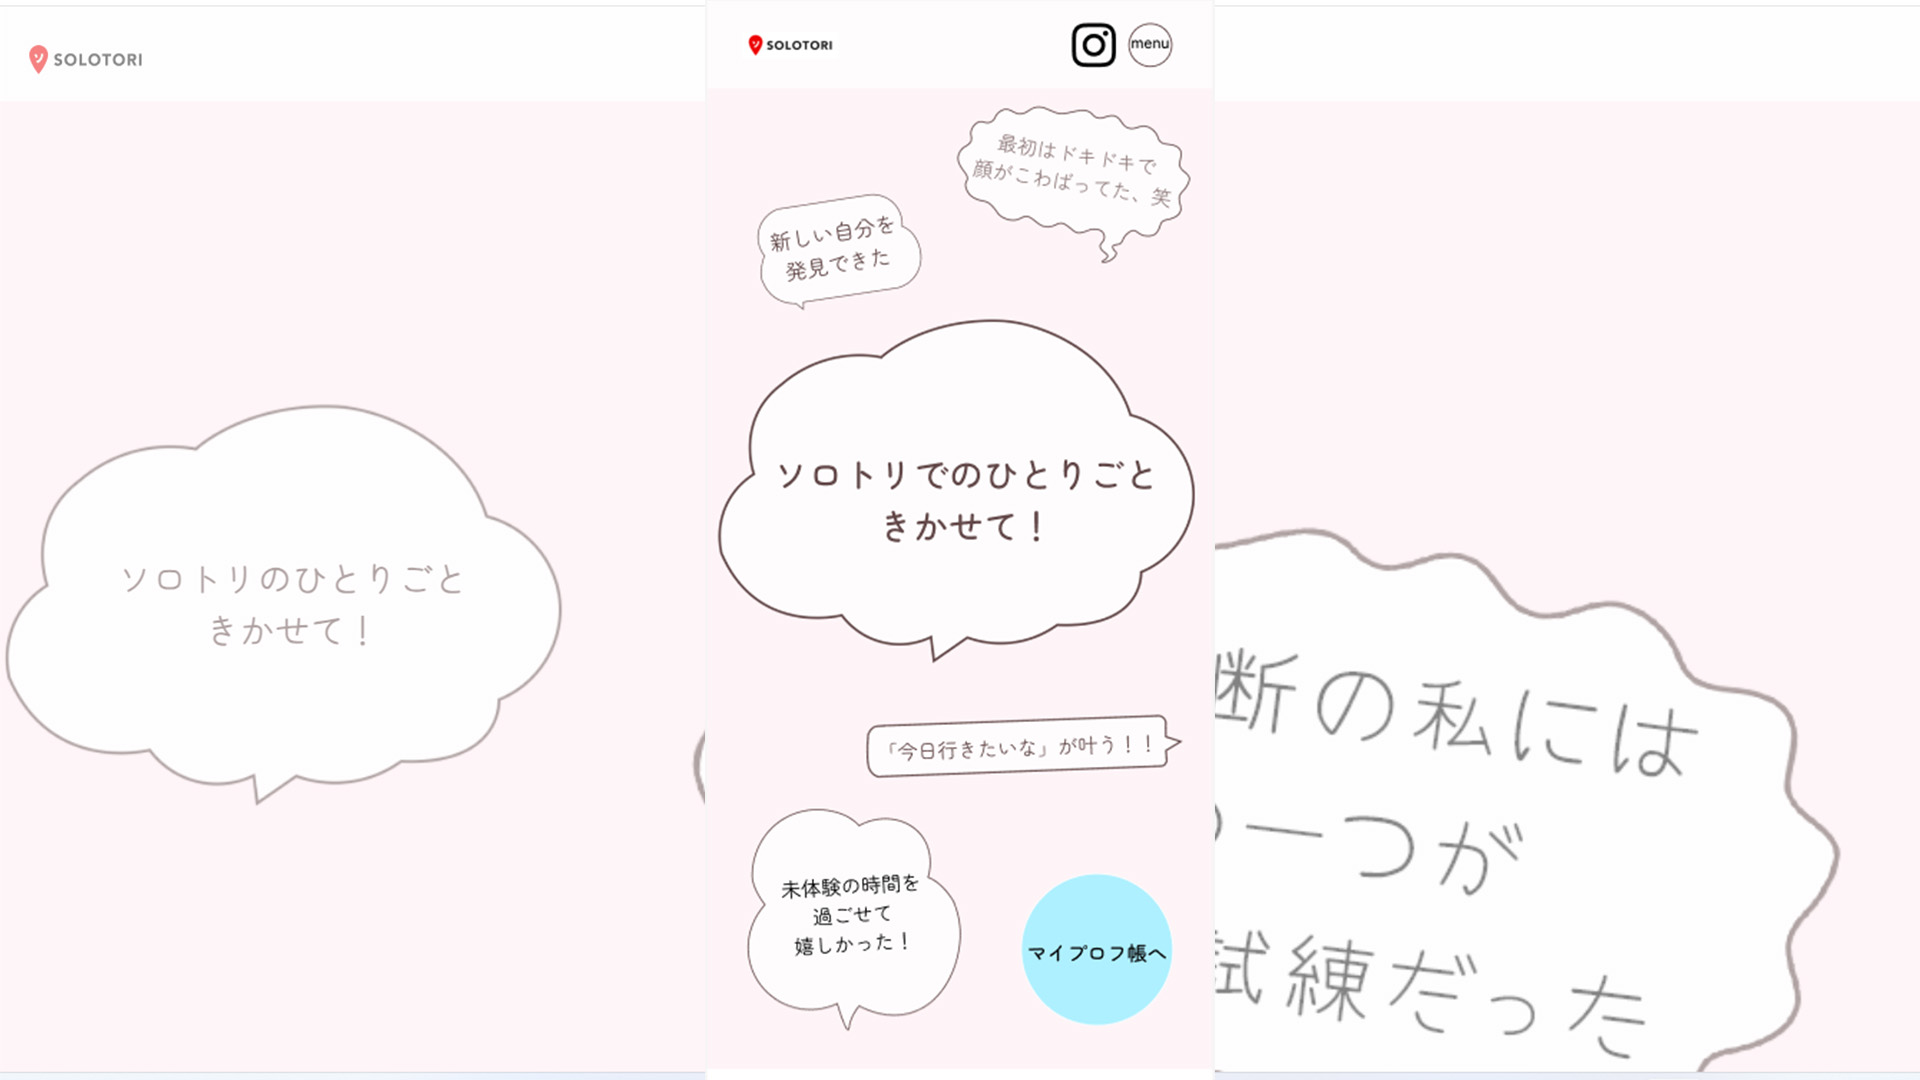 Webデザイン科 1年 河田 海月の作品ファーストビュー